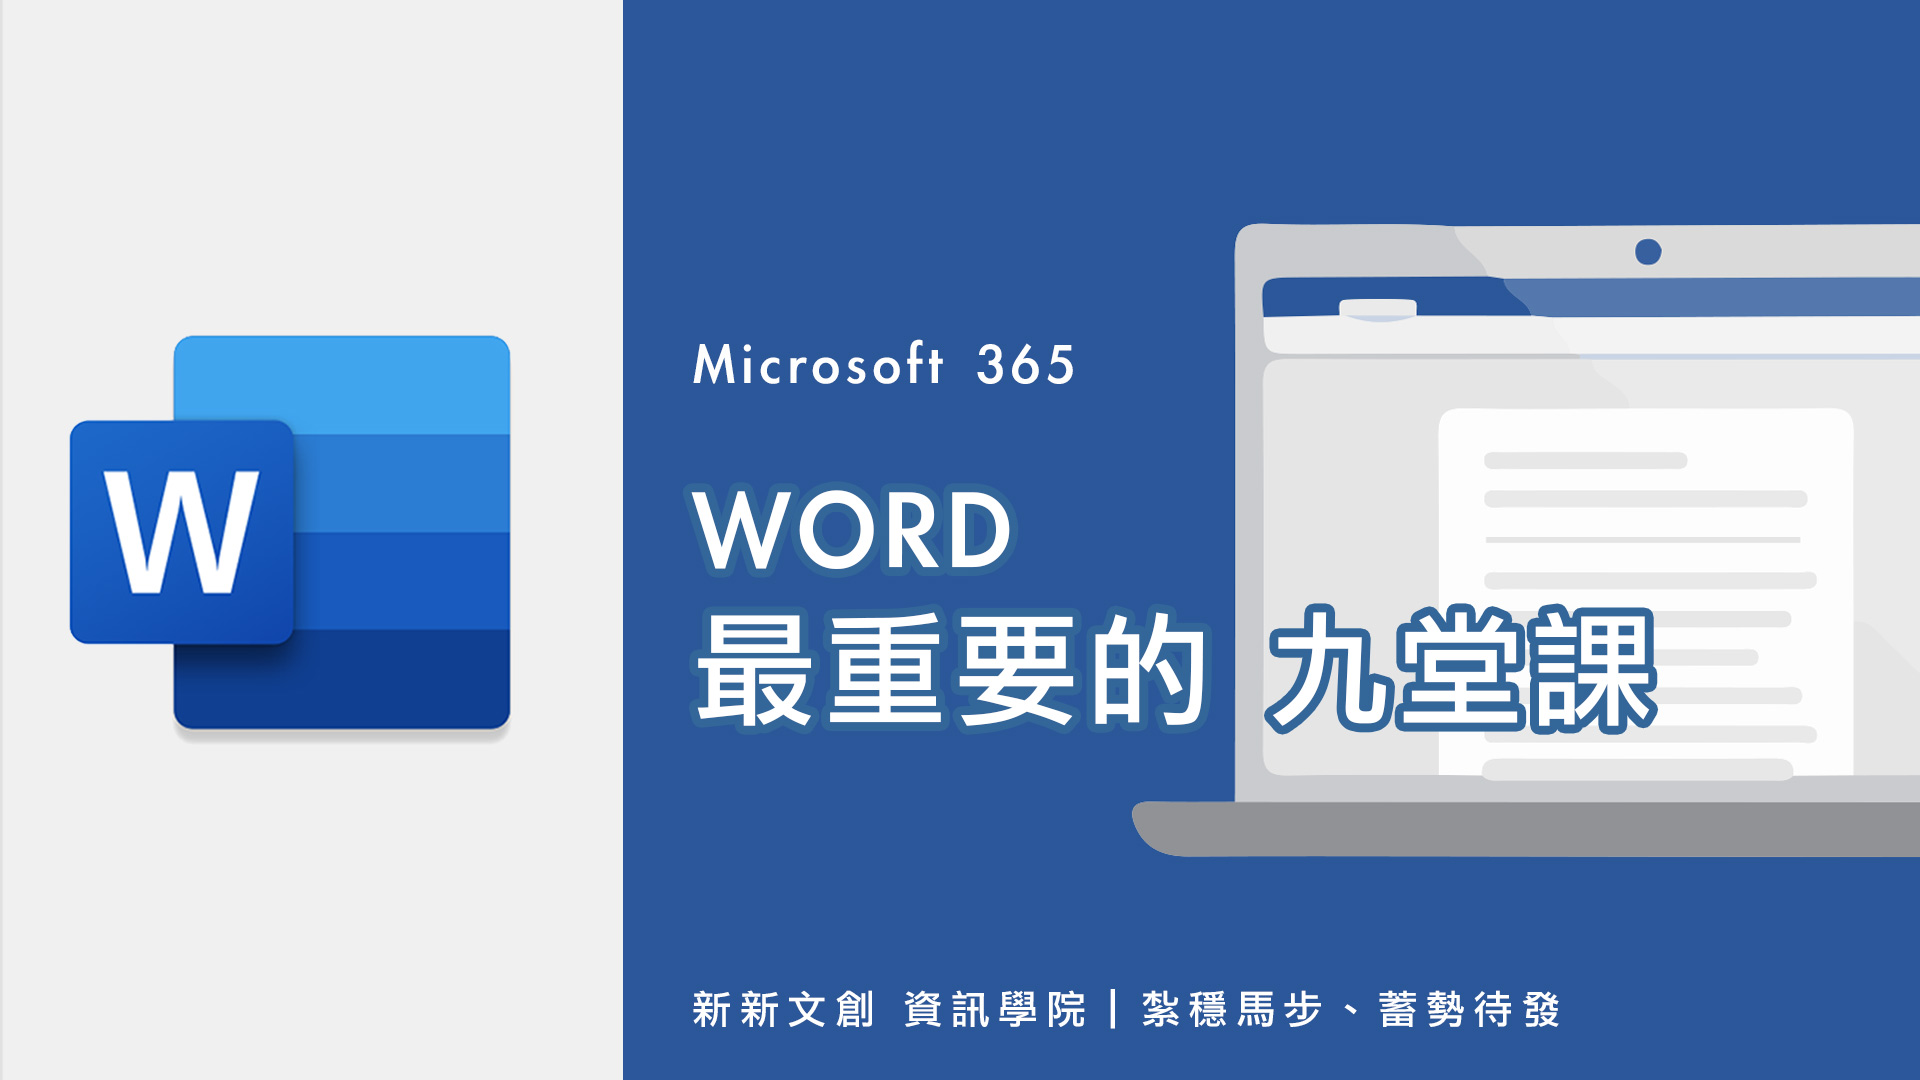 Microsoft 365 Word Office 365